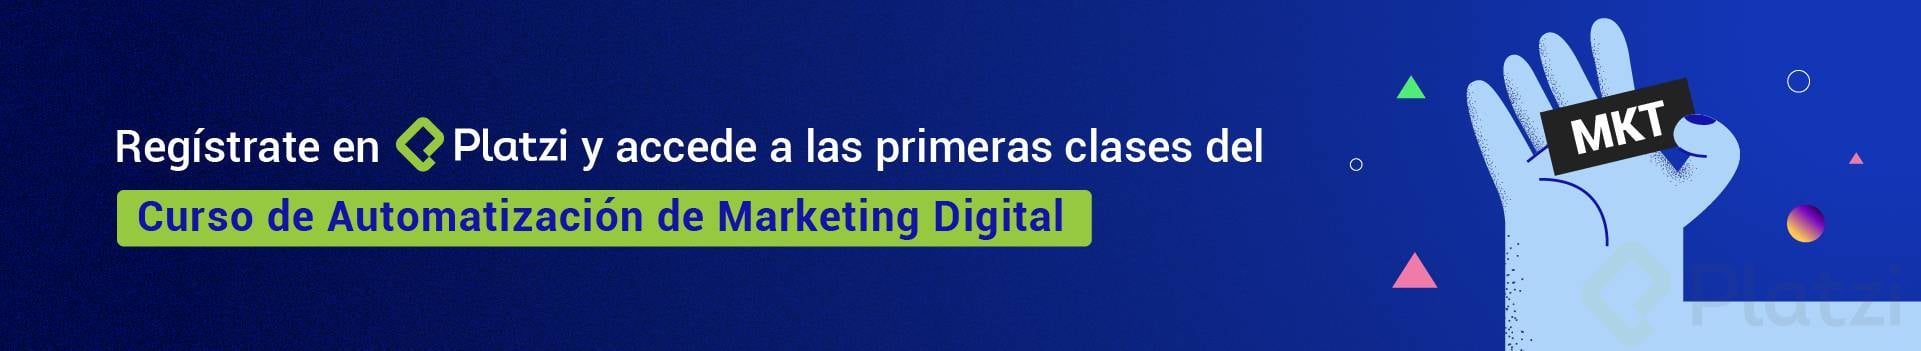 terminologia-marketing-digital_banner-automatizaciÃ³n.png